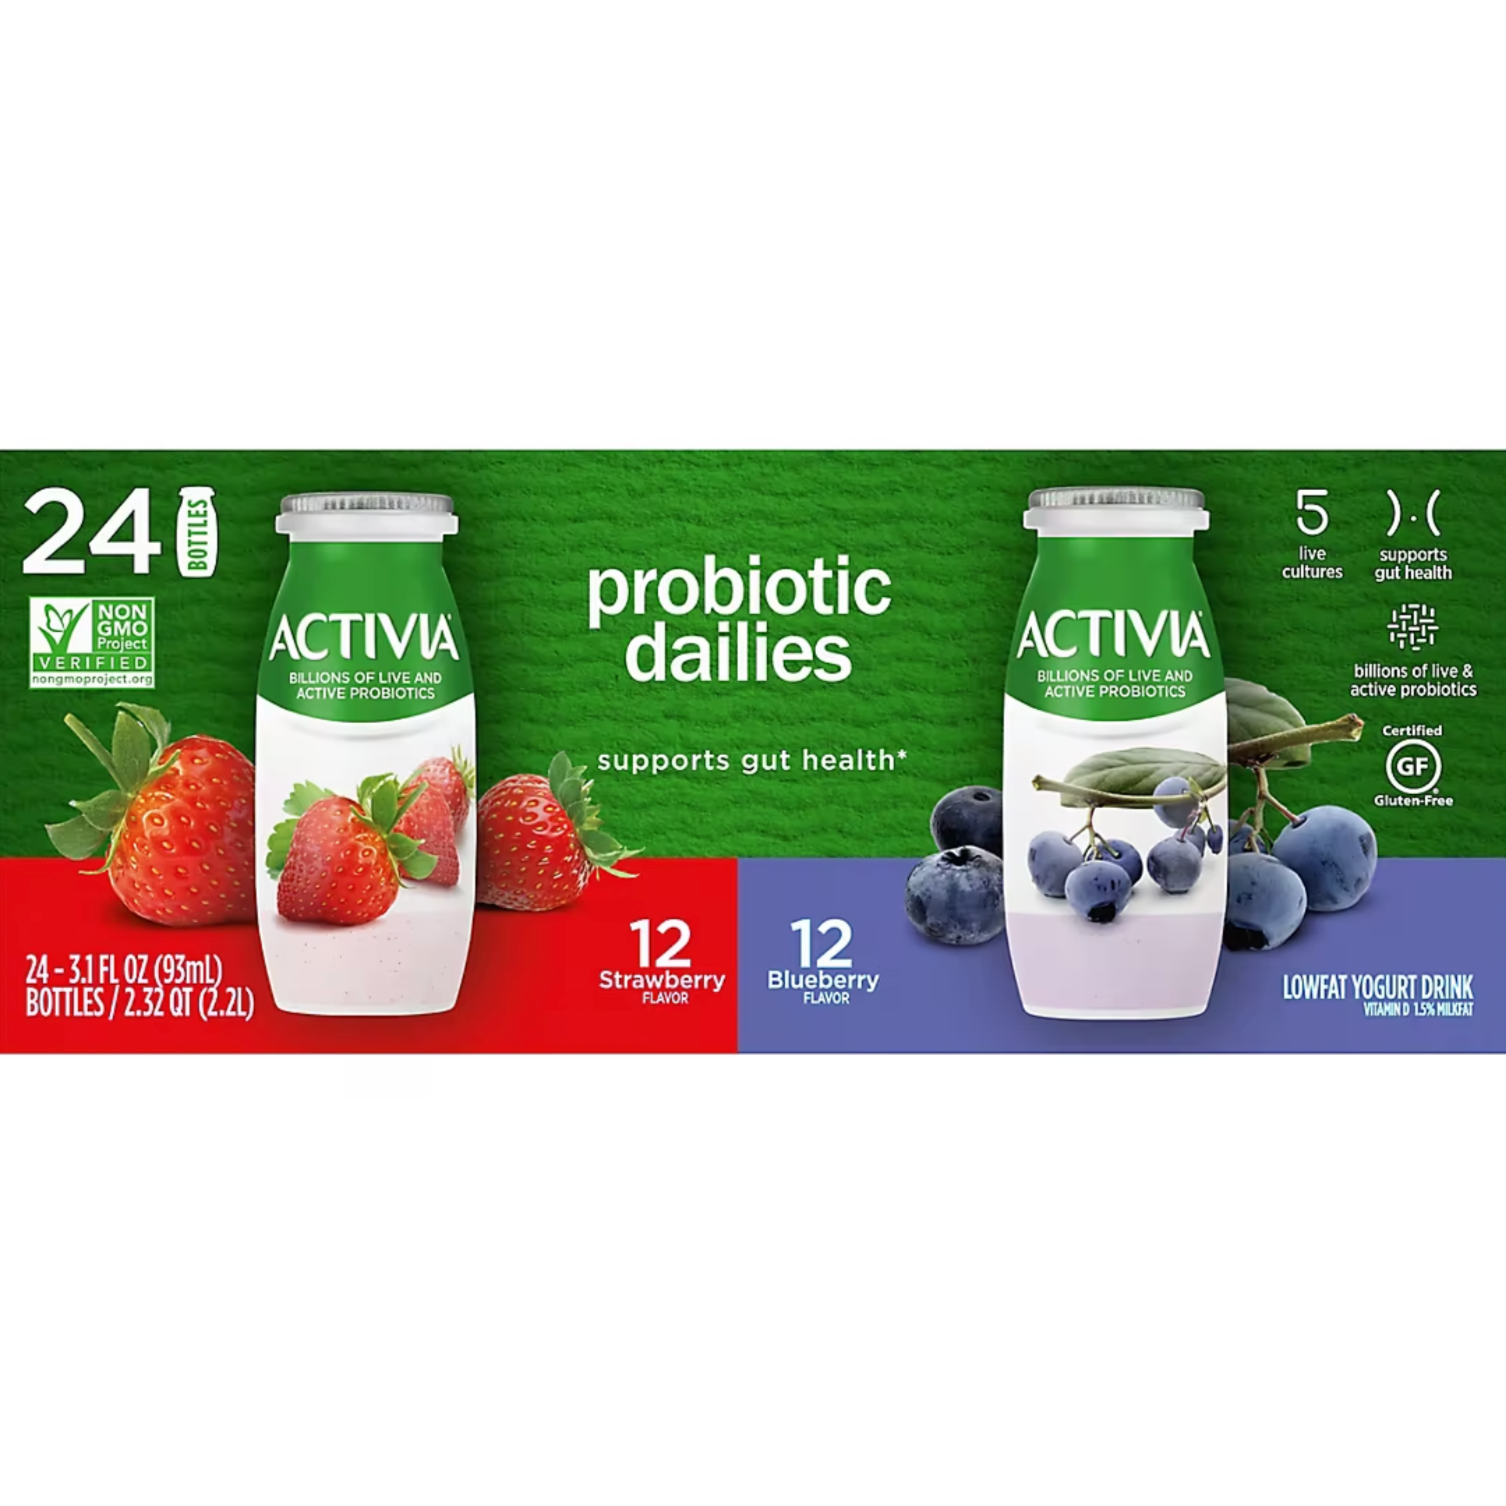 Dannon Activia Probiotic Dailies fl. 24 Drink Yogurt Variety oz., 3.1 Count Pack, Low-Fat